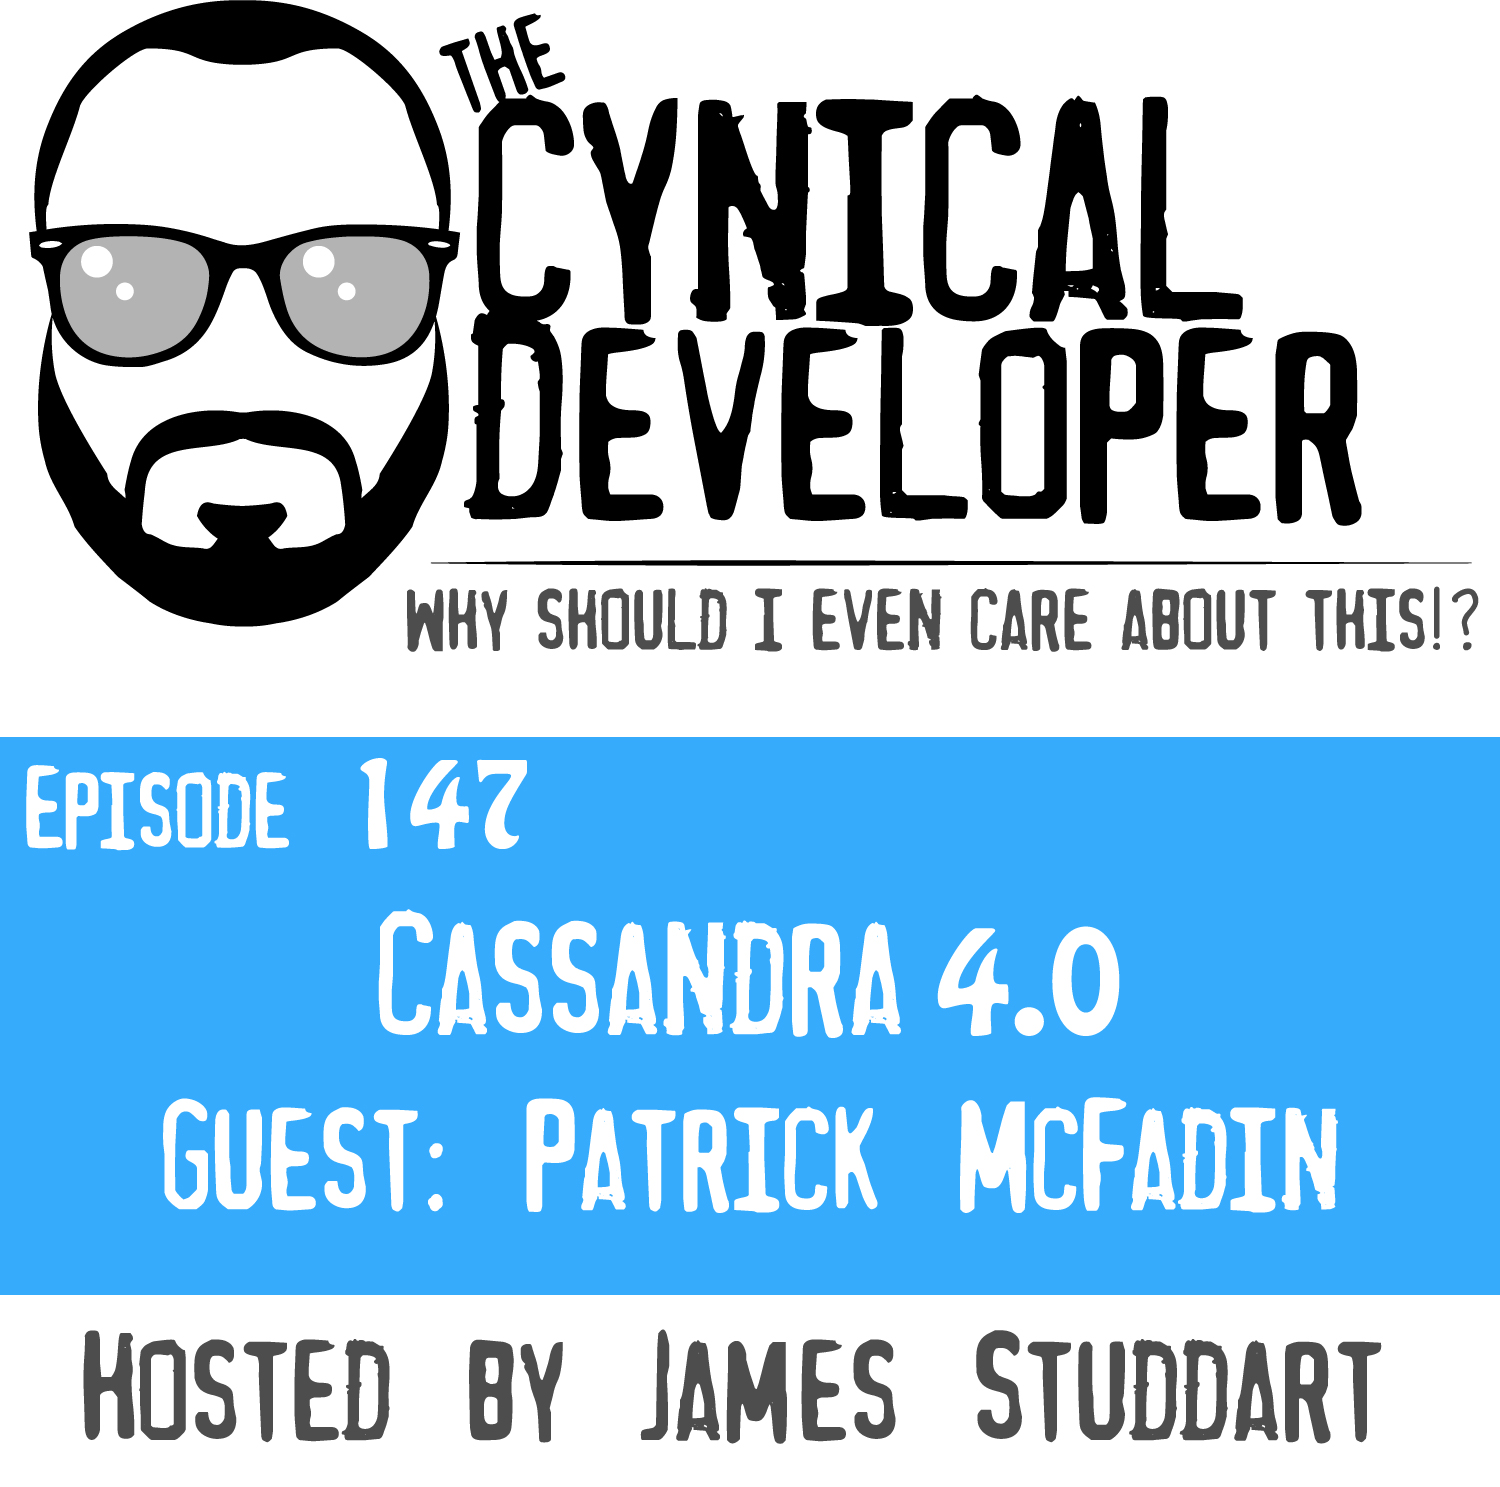 Episode 147 - Cassandra 4.0